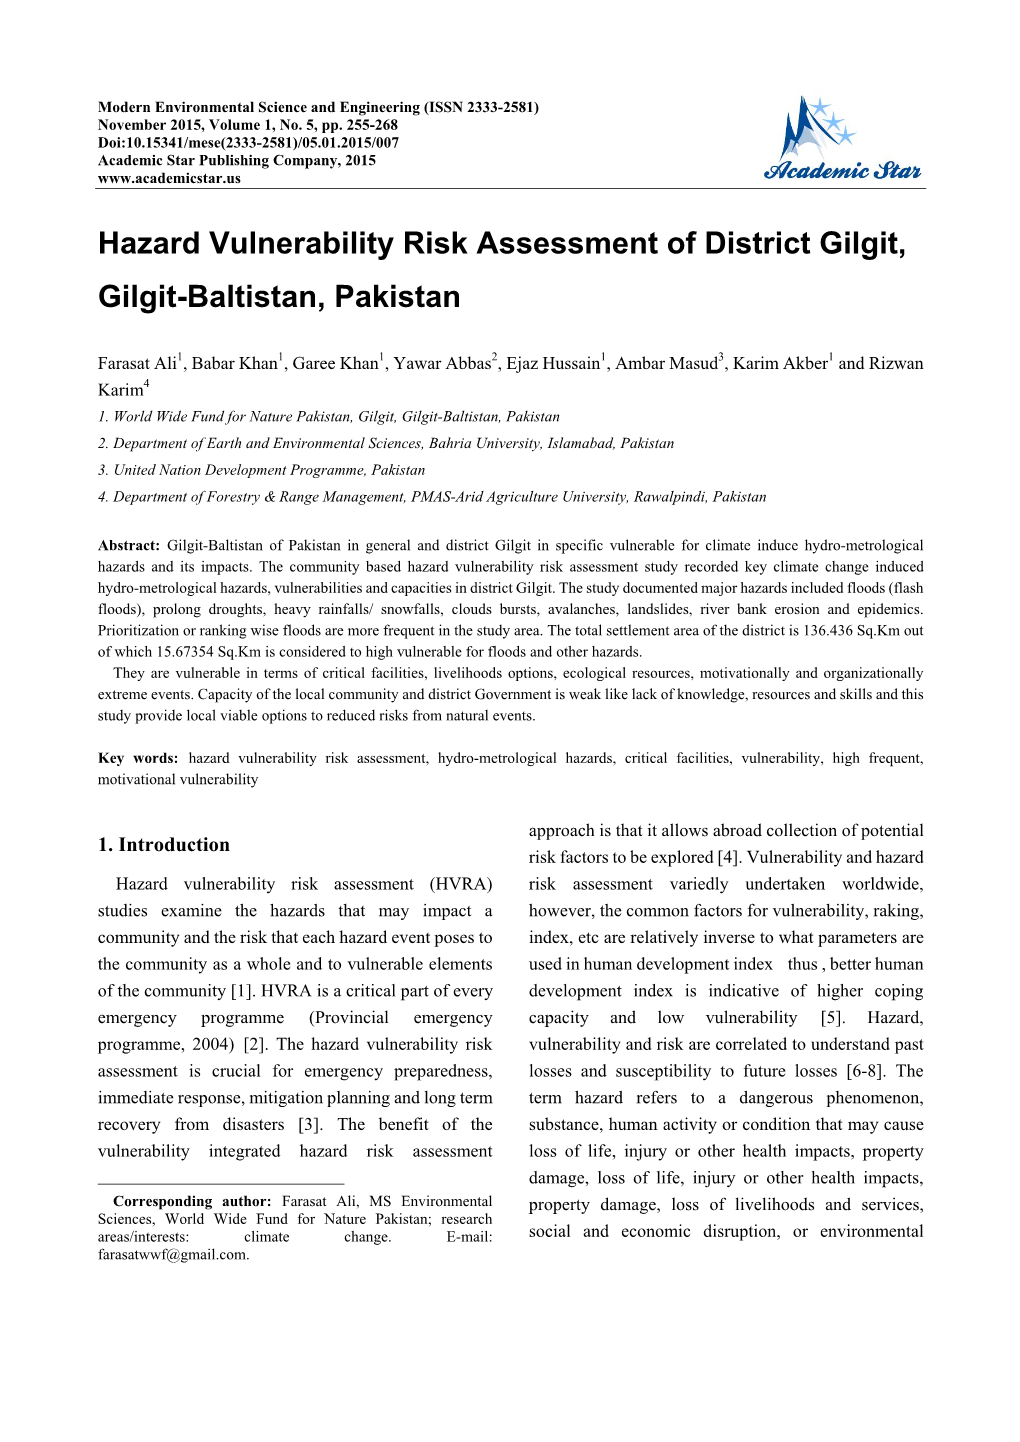 Hazard Vulnerability Risk Assessment of District Gilgit, Gilgit-Baltistan, Pakistan